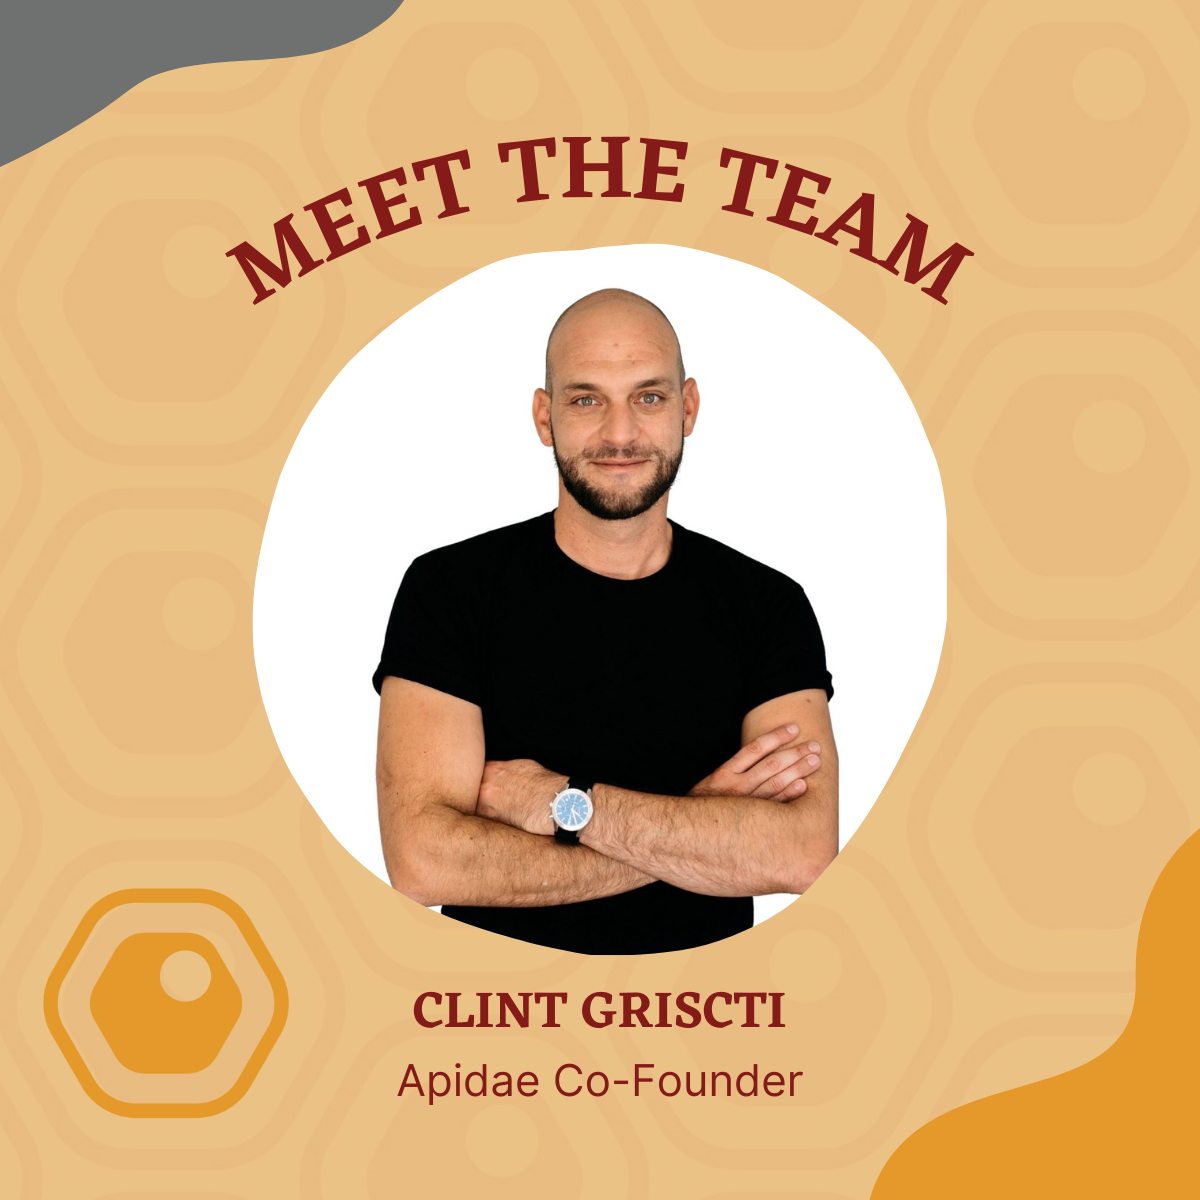 Meet the Apidae team - Clint Griscti - Co-Founder